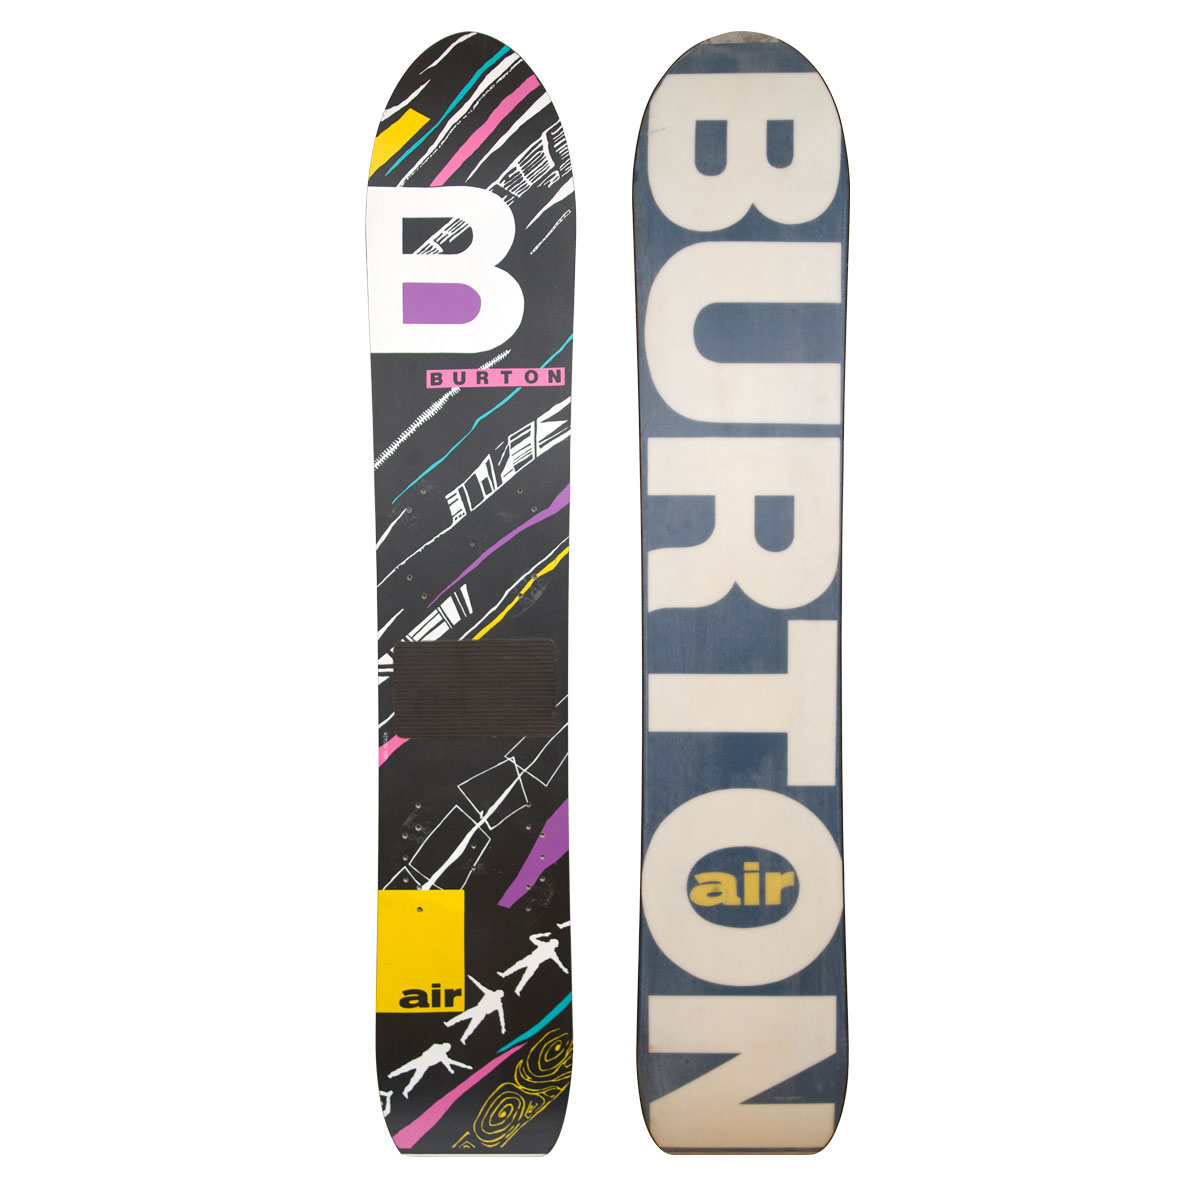 Details about   Burton twin 144 Vintage Snowboard 